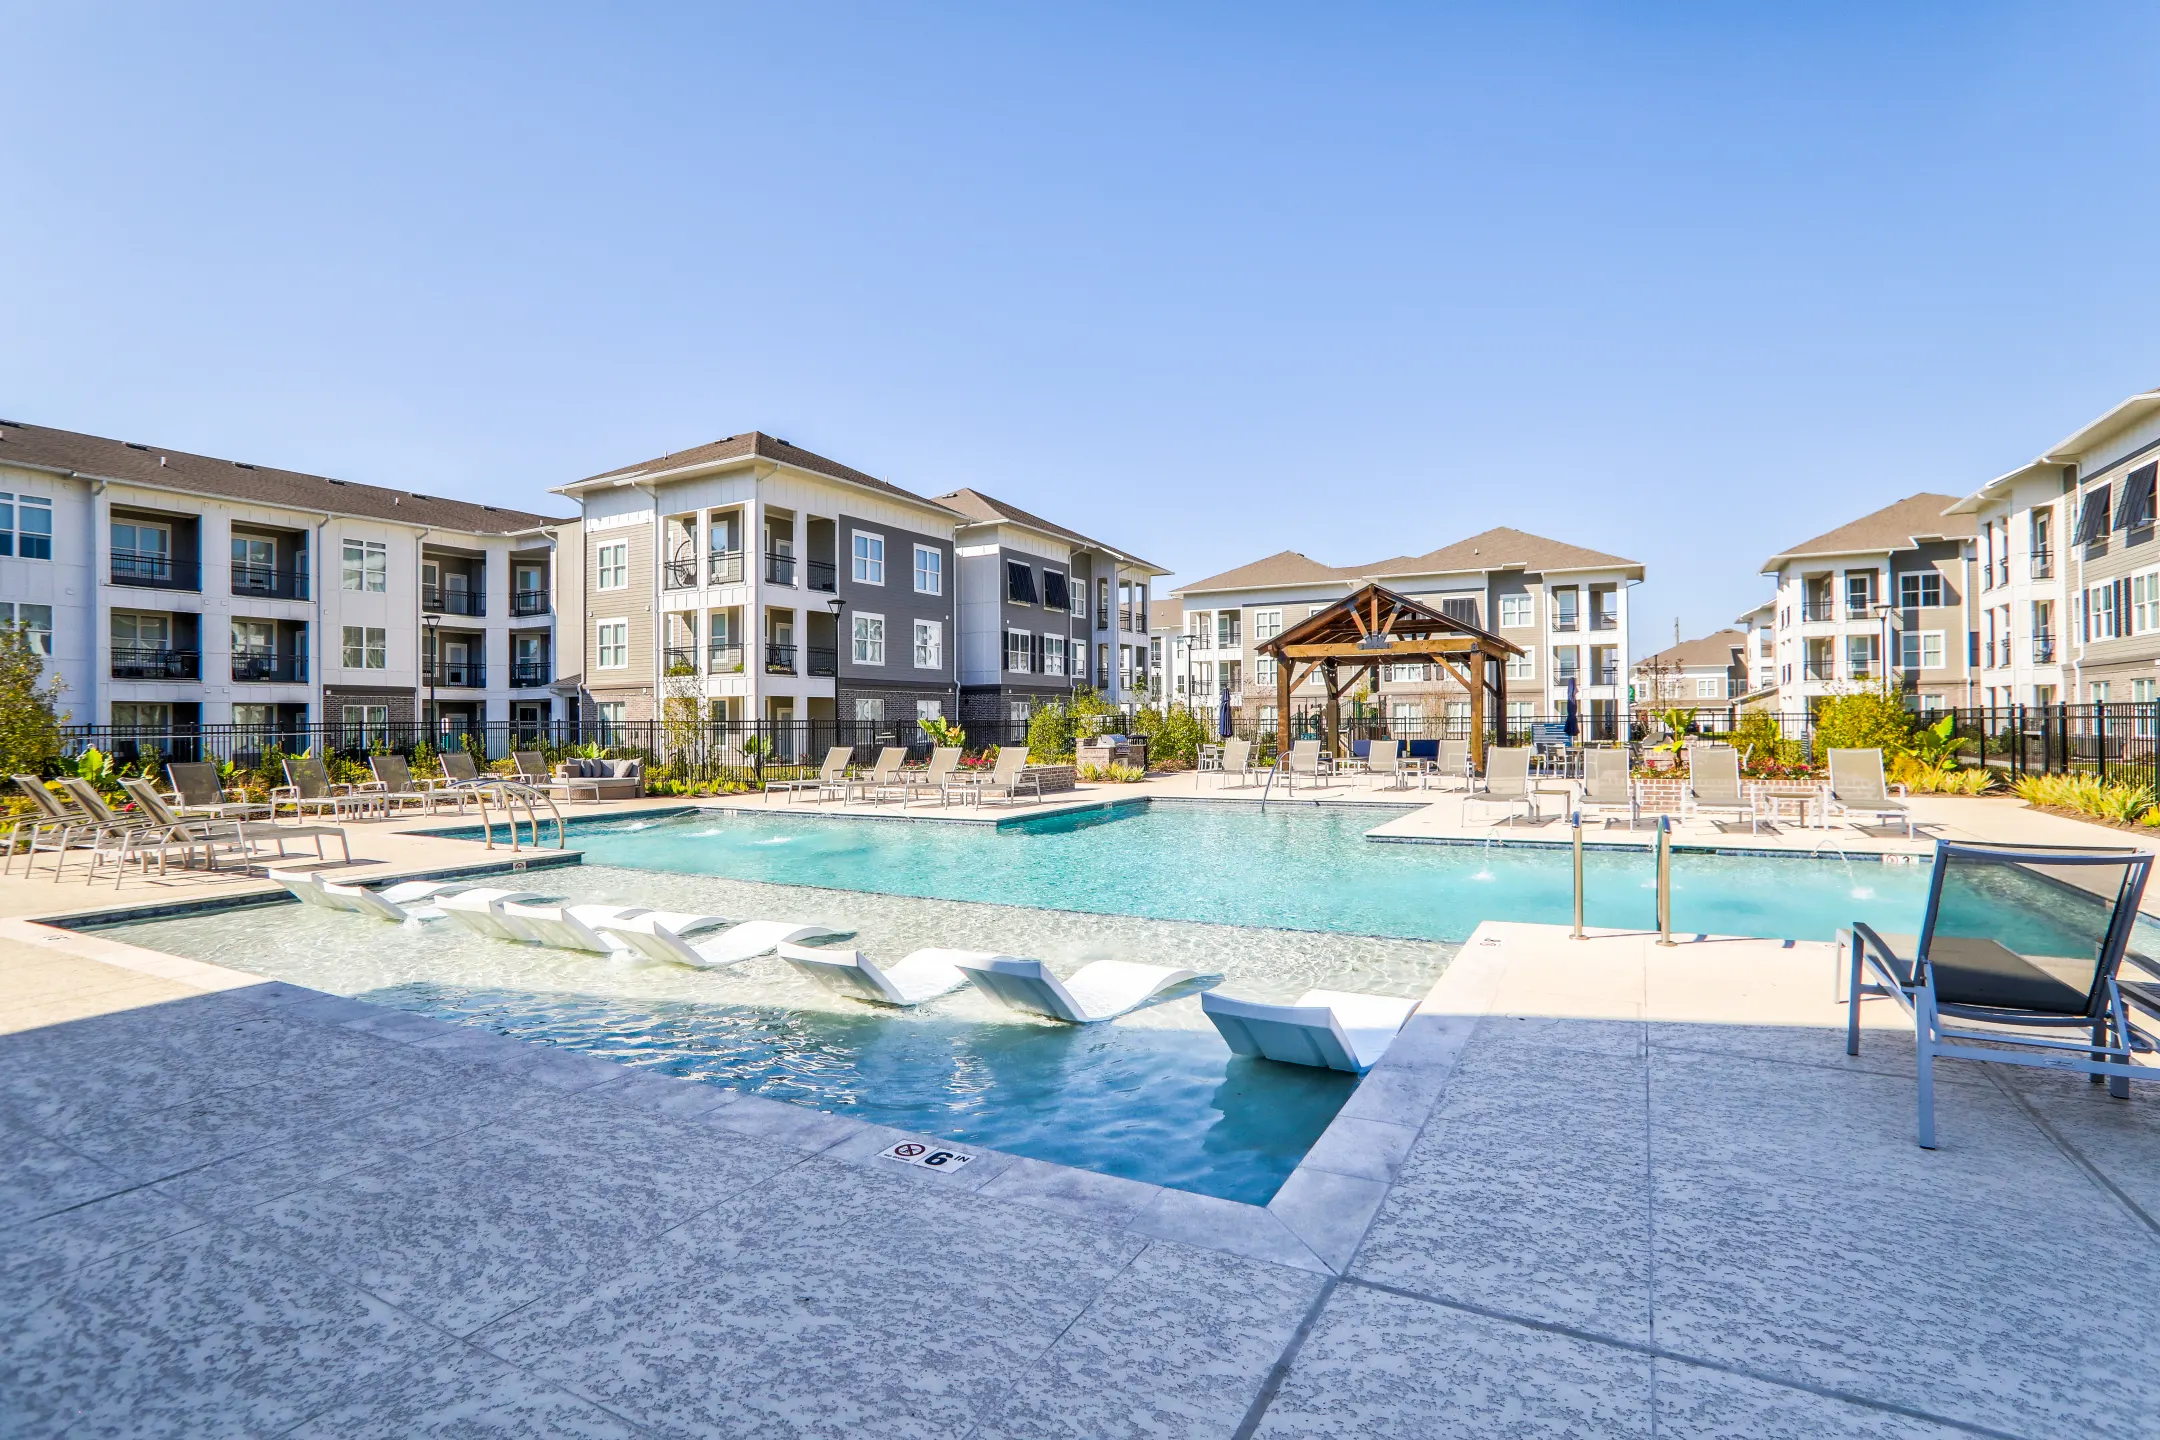 Pool - Sweetwater Apartments - Addis, LA